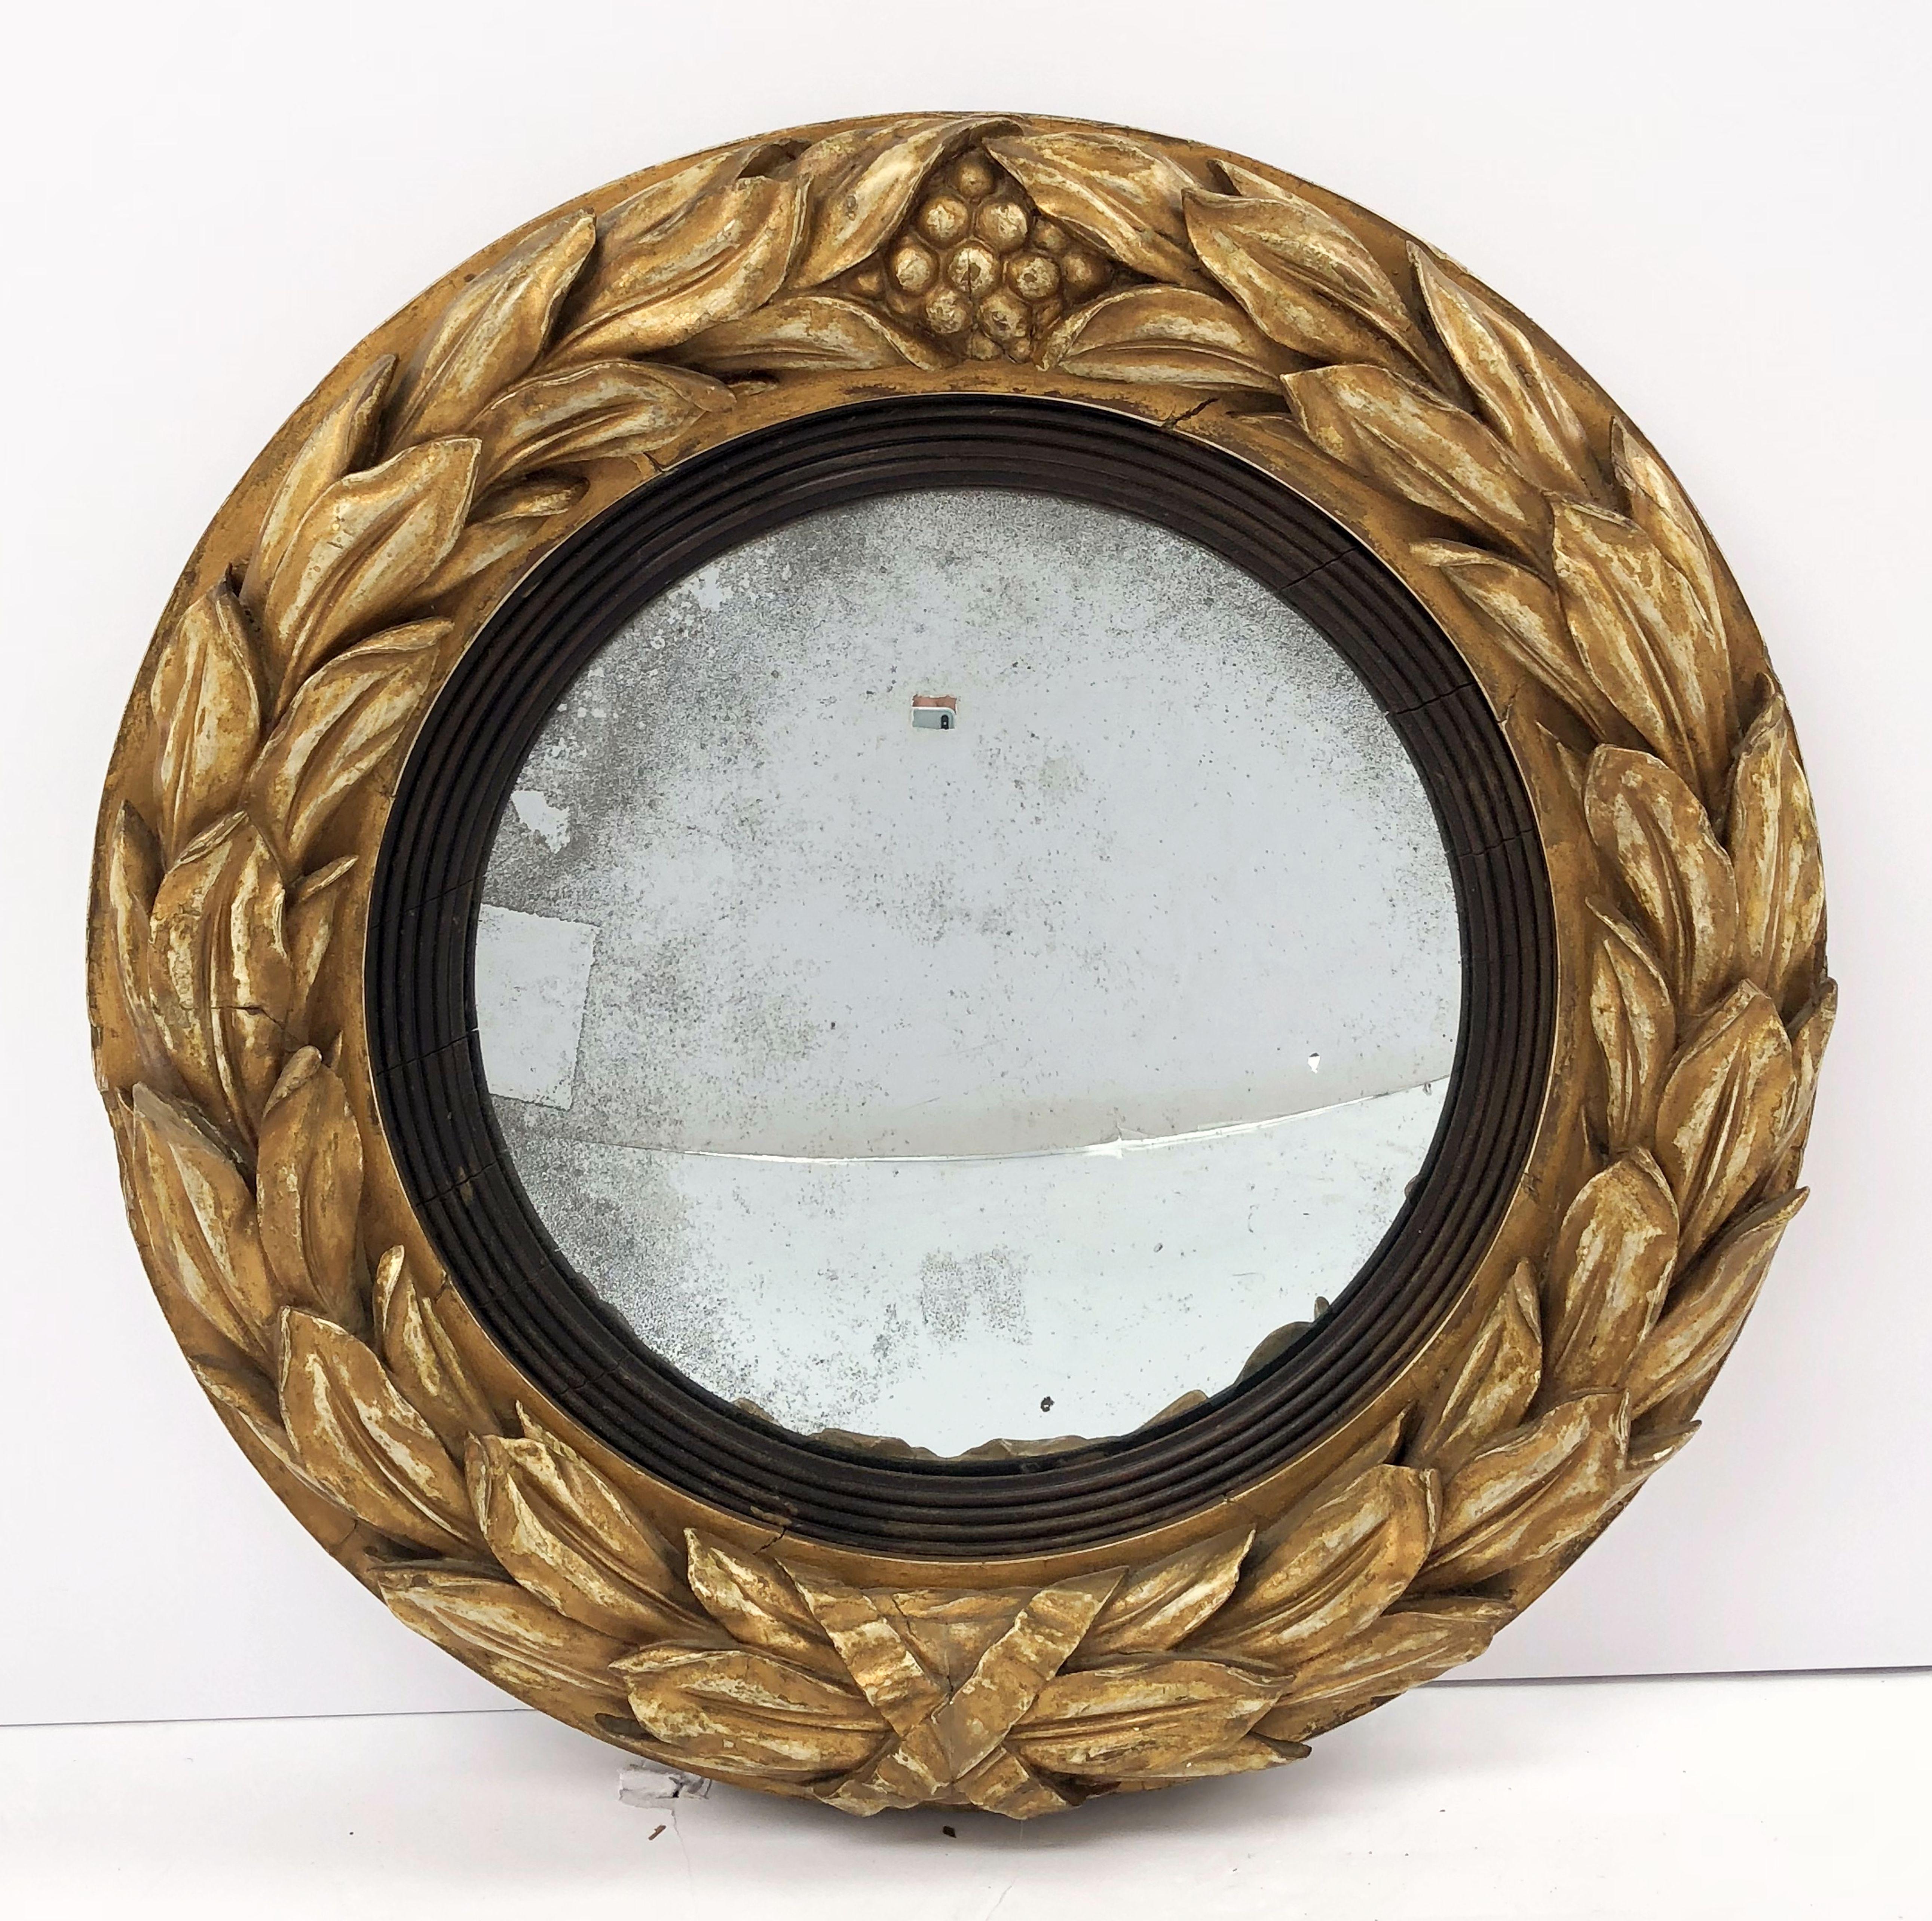 19th Century Gilt Convex Mirror from the Regency Era (Diameter 19 1/2)